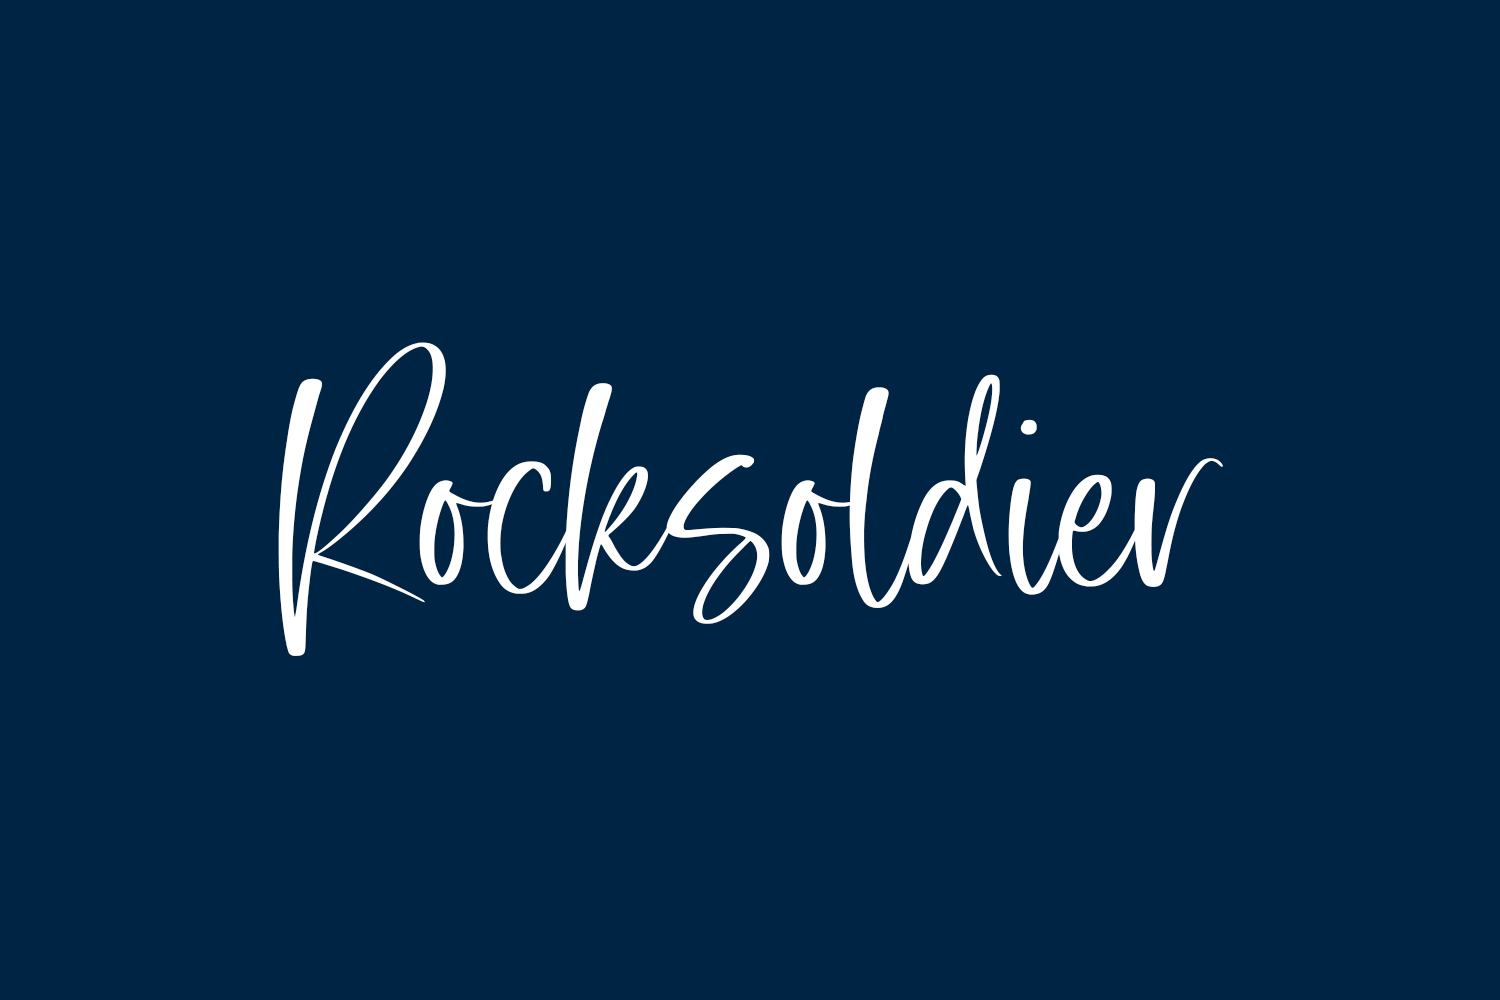 Rocksoldier Free Font